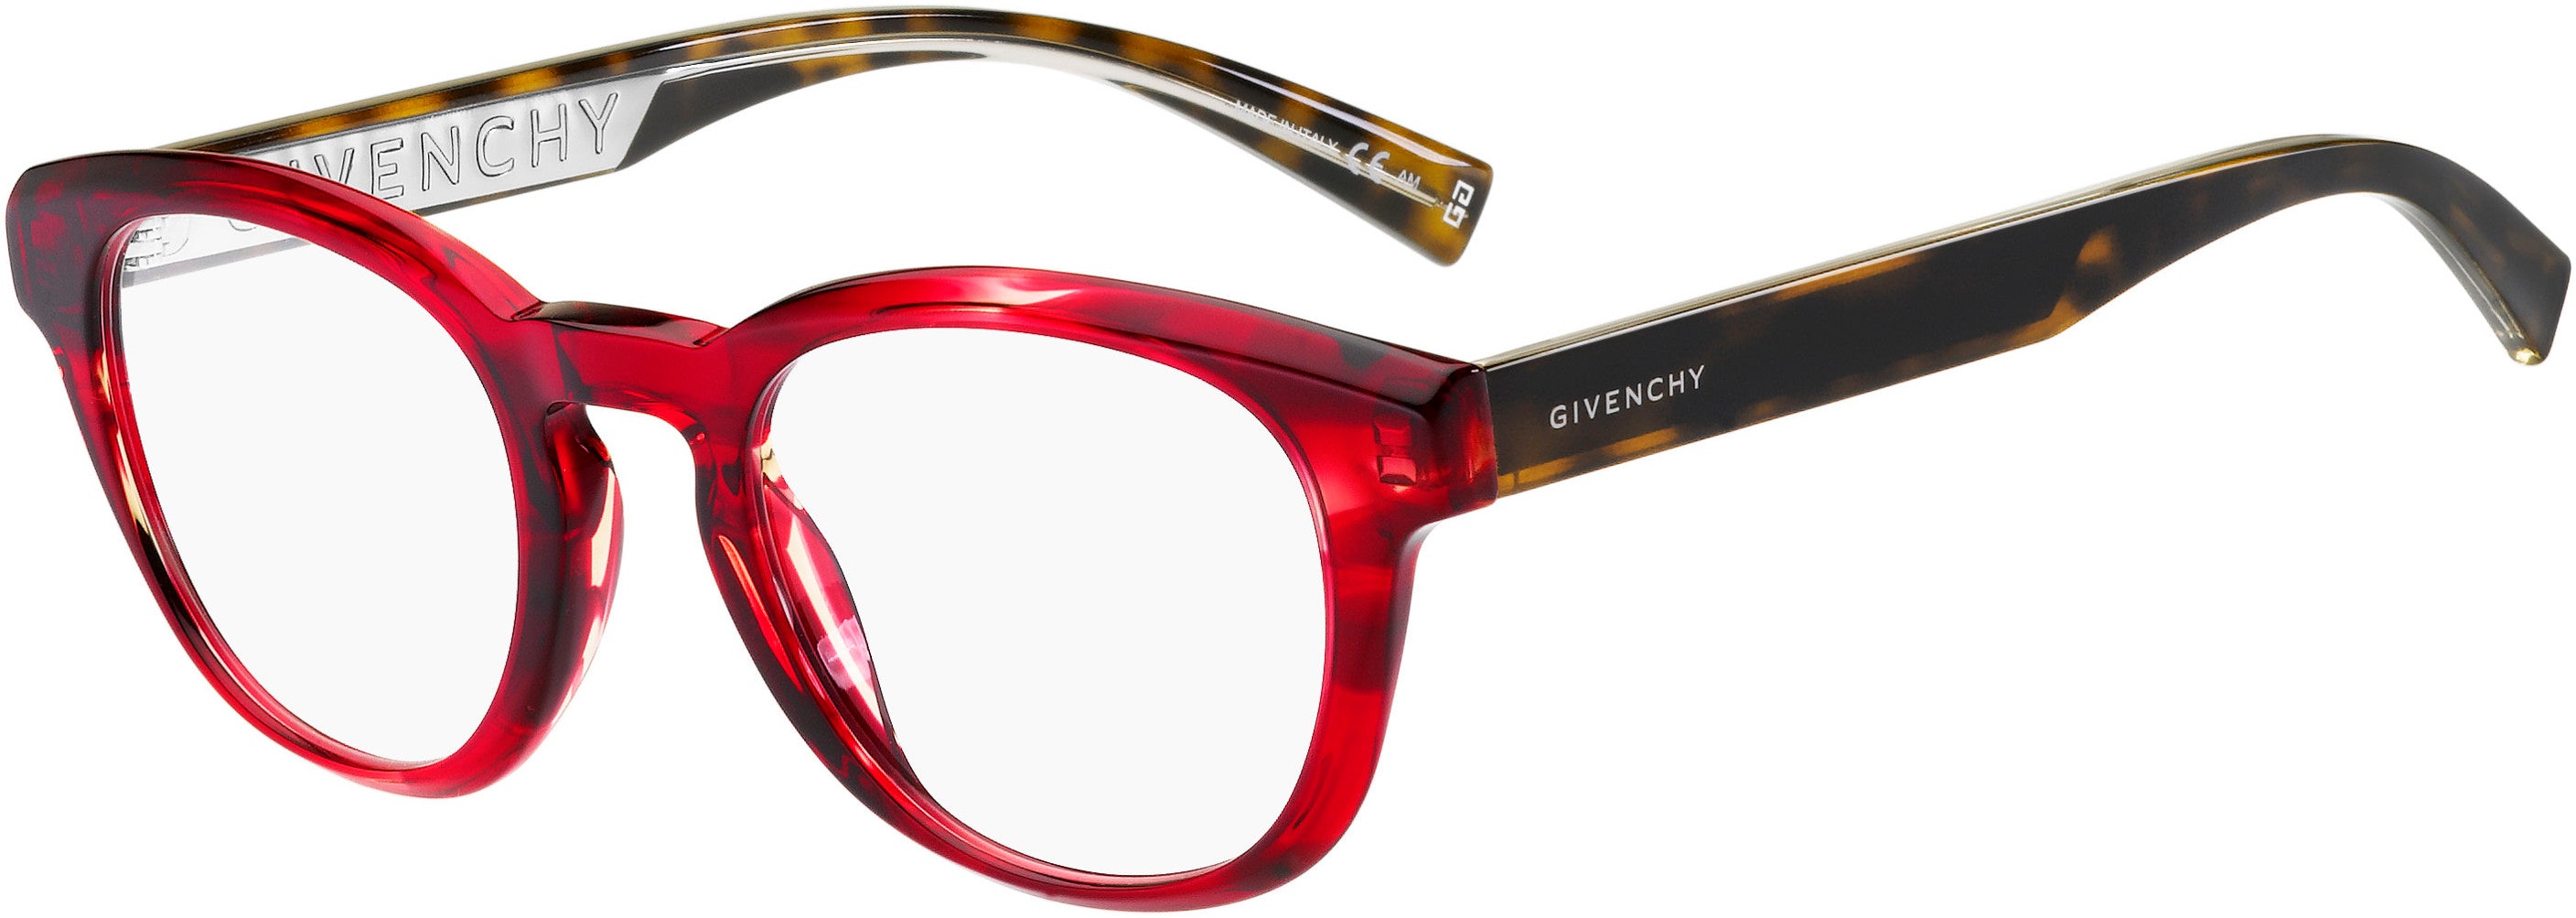  Givenchy 0156 Tea Cup Eyeglasses 0573-0573  Red Horn (00 Demo Lens)